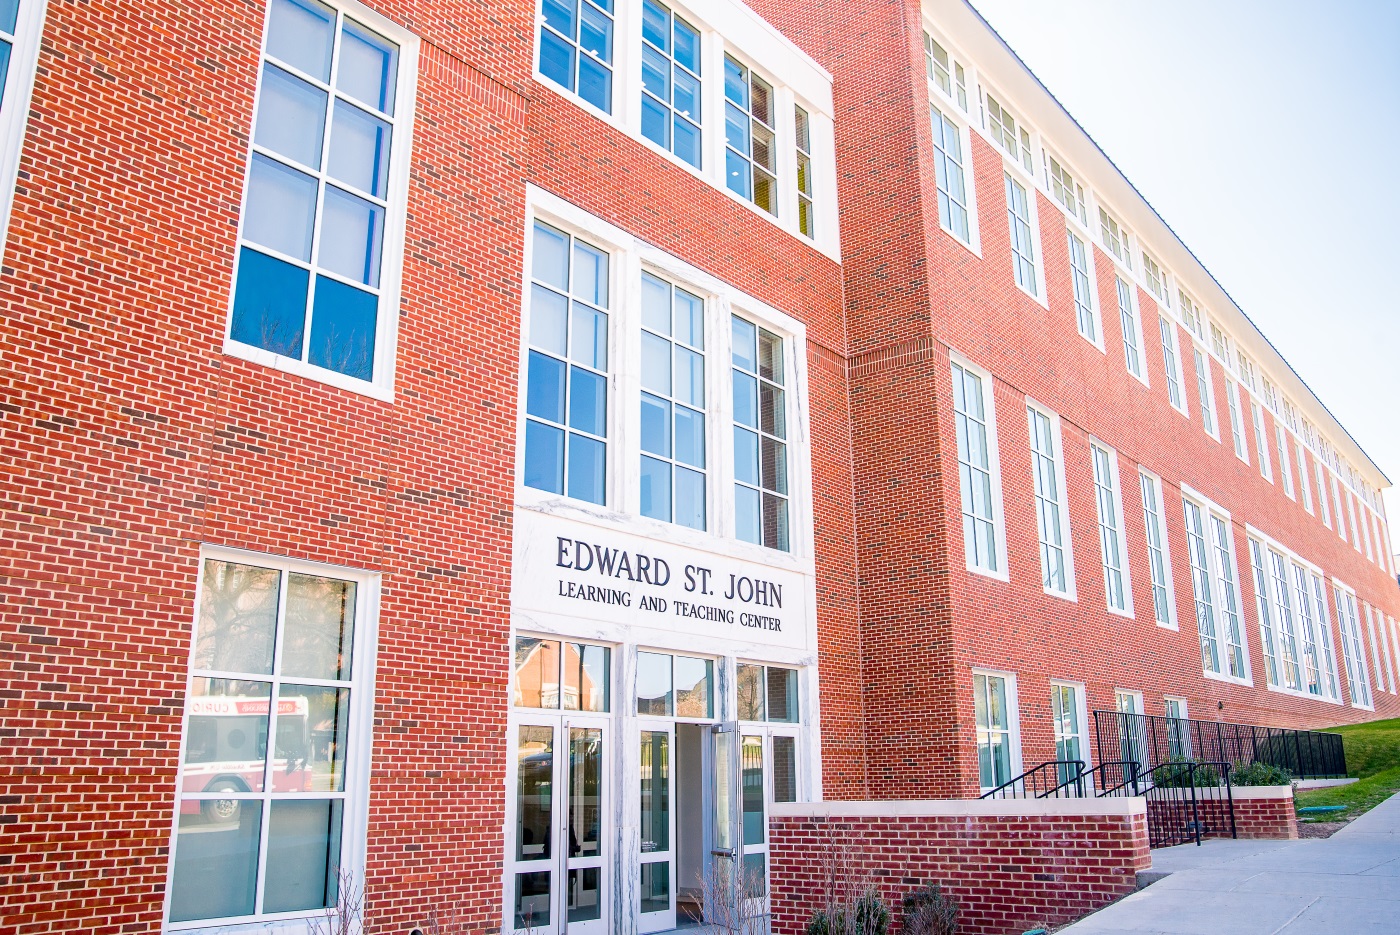 Edward St. John Learning and Teaching Center